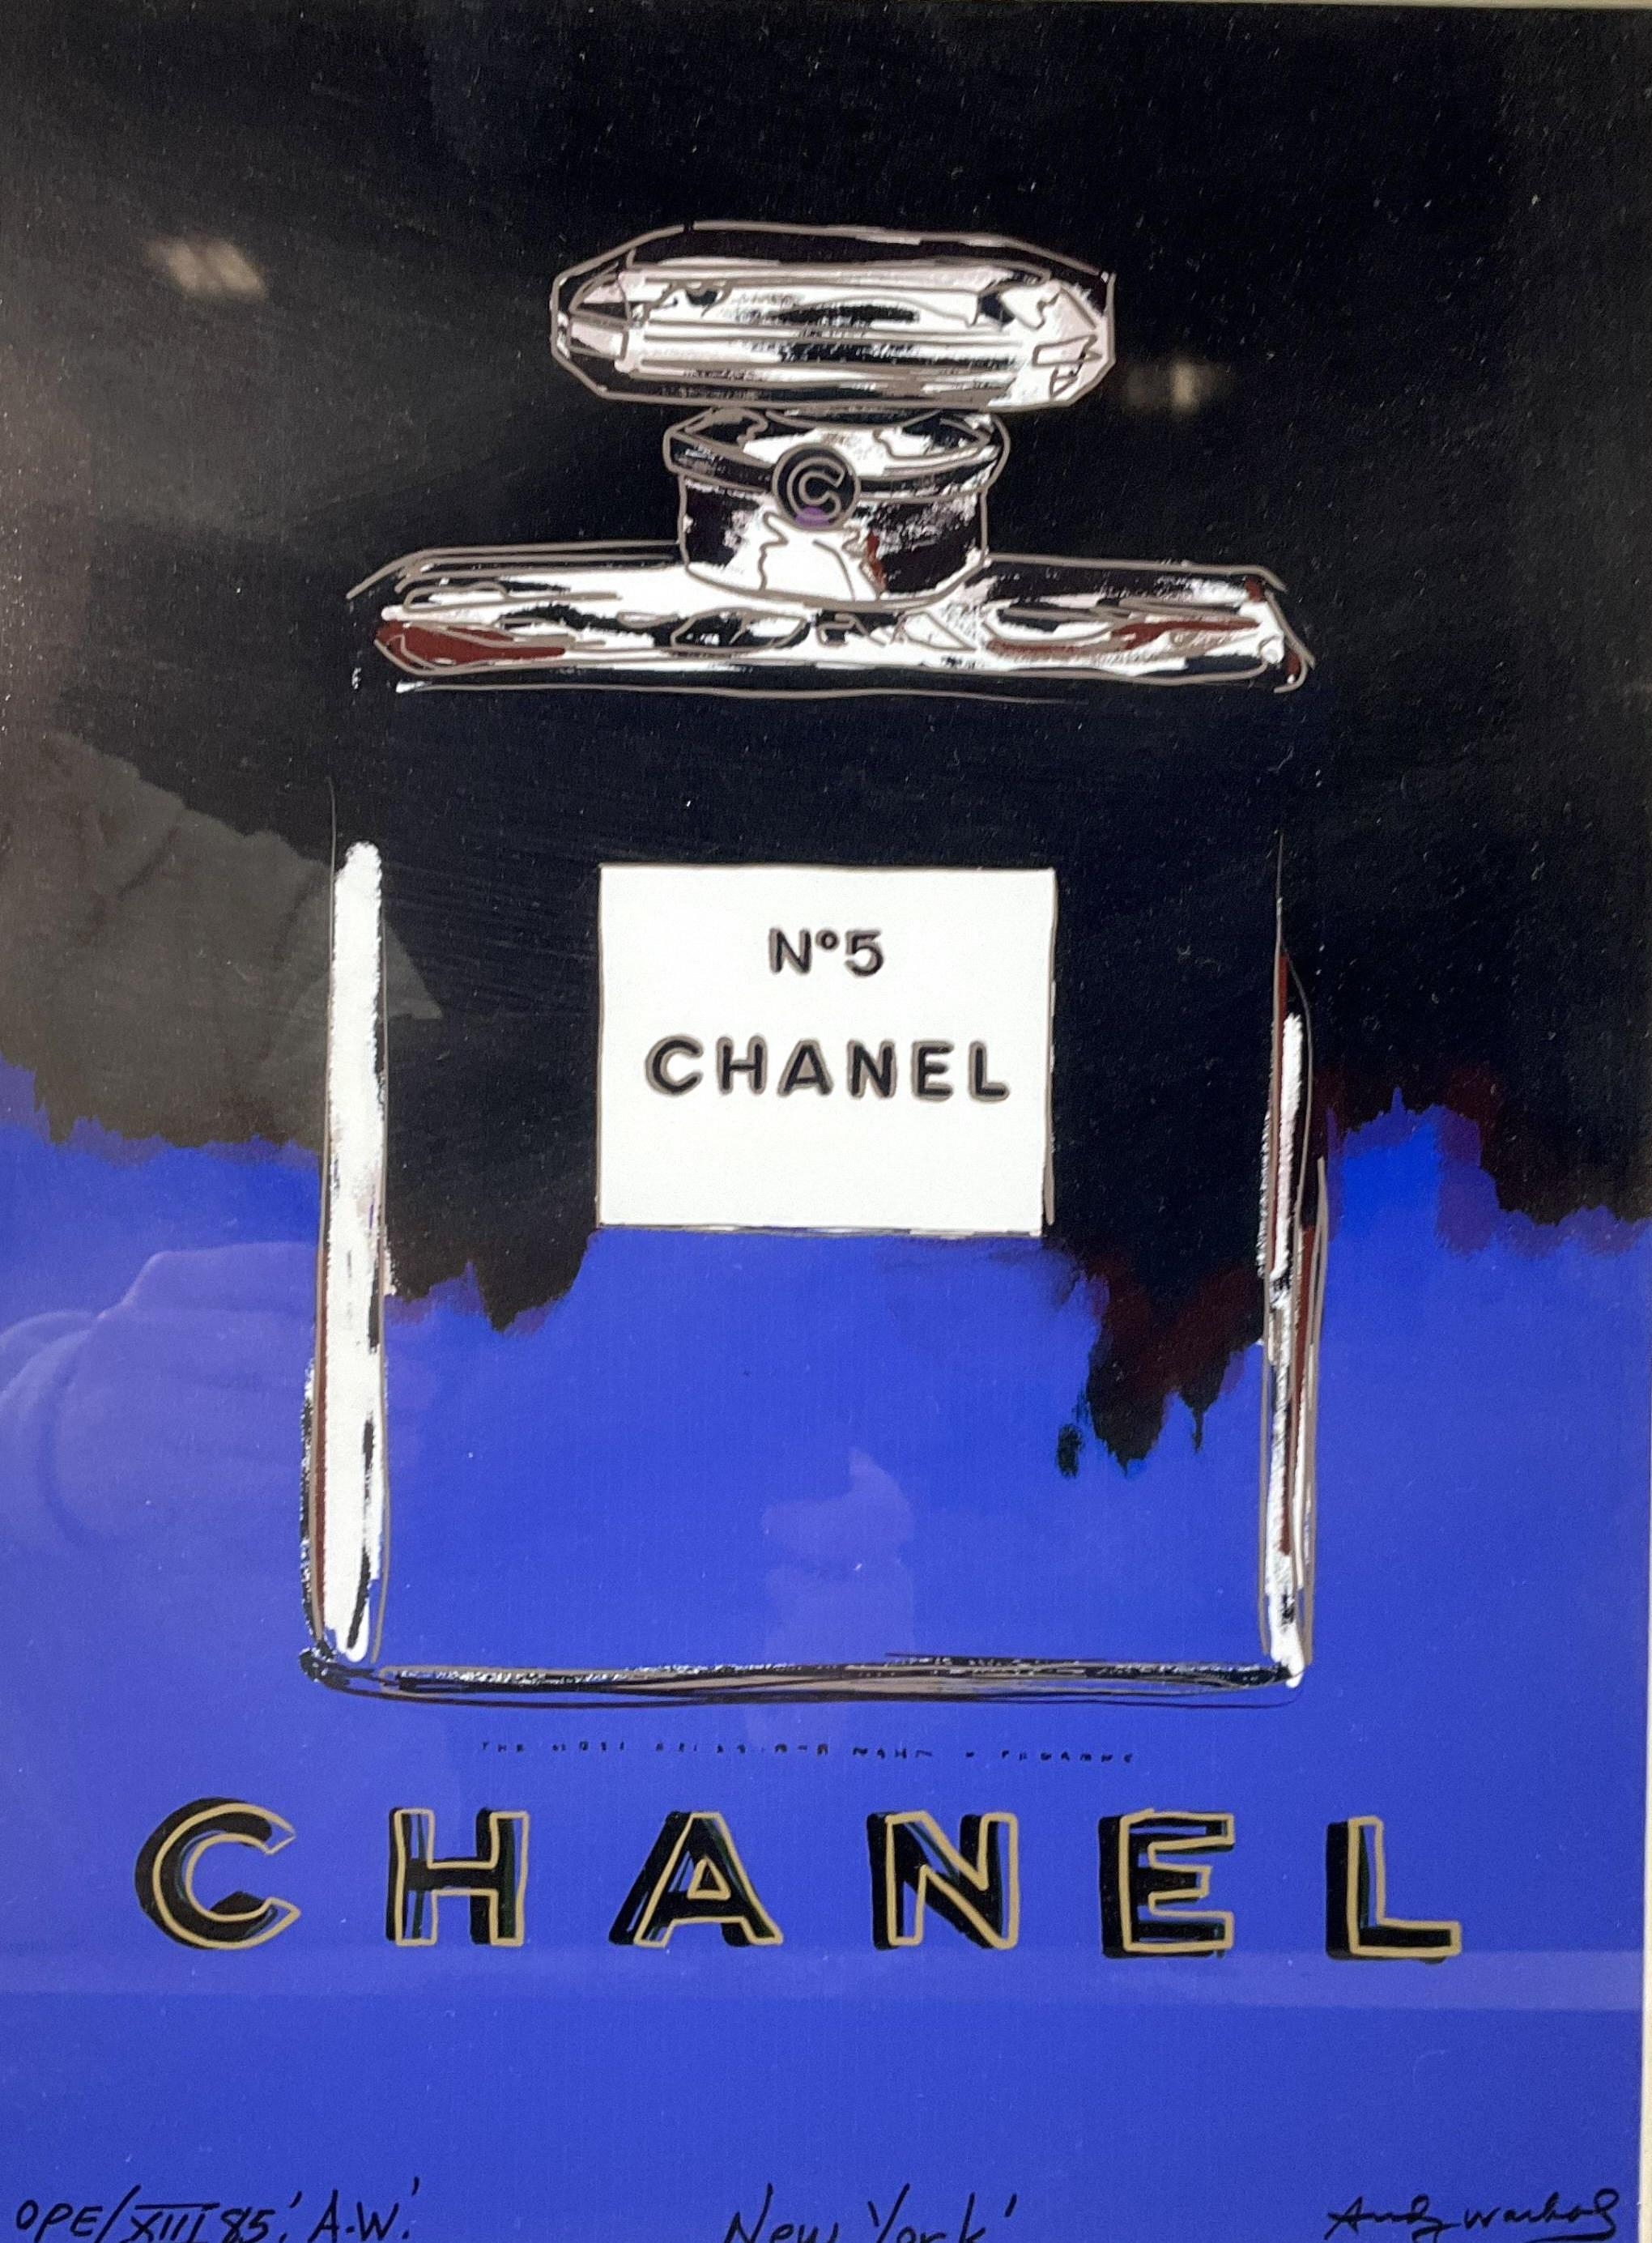 Andy Warhol, Chanel No.5 (blue)